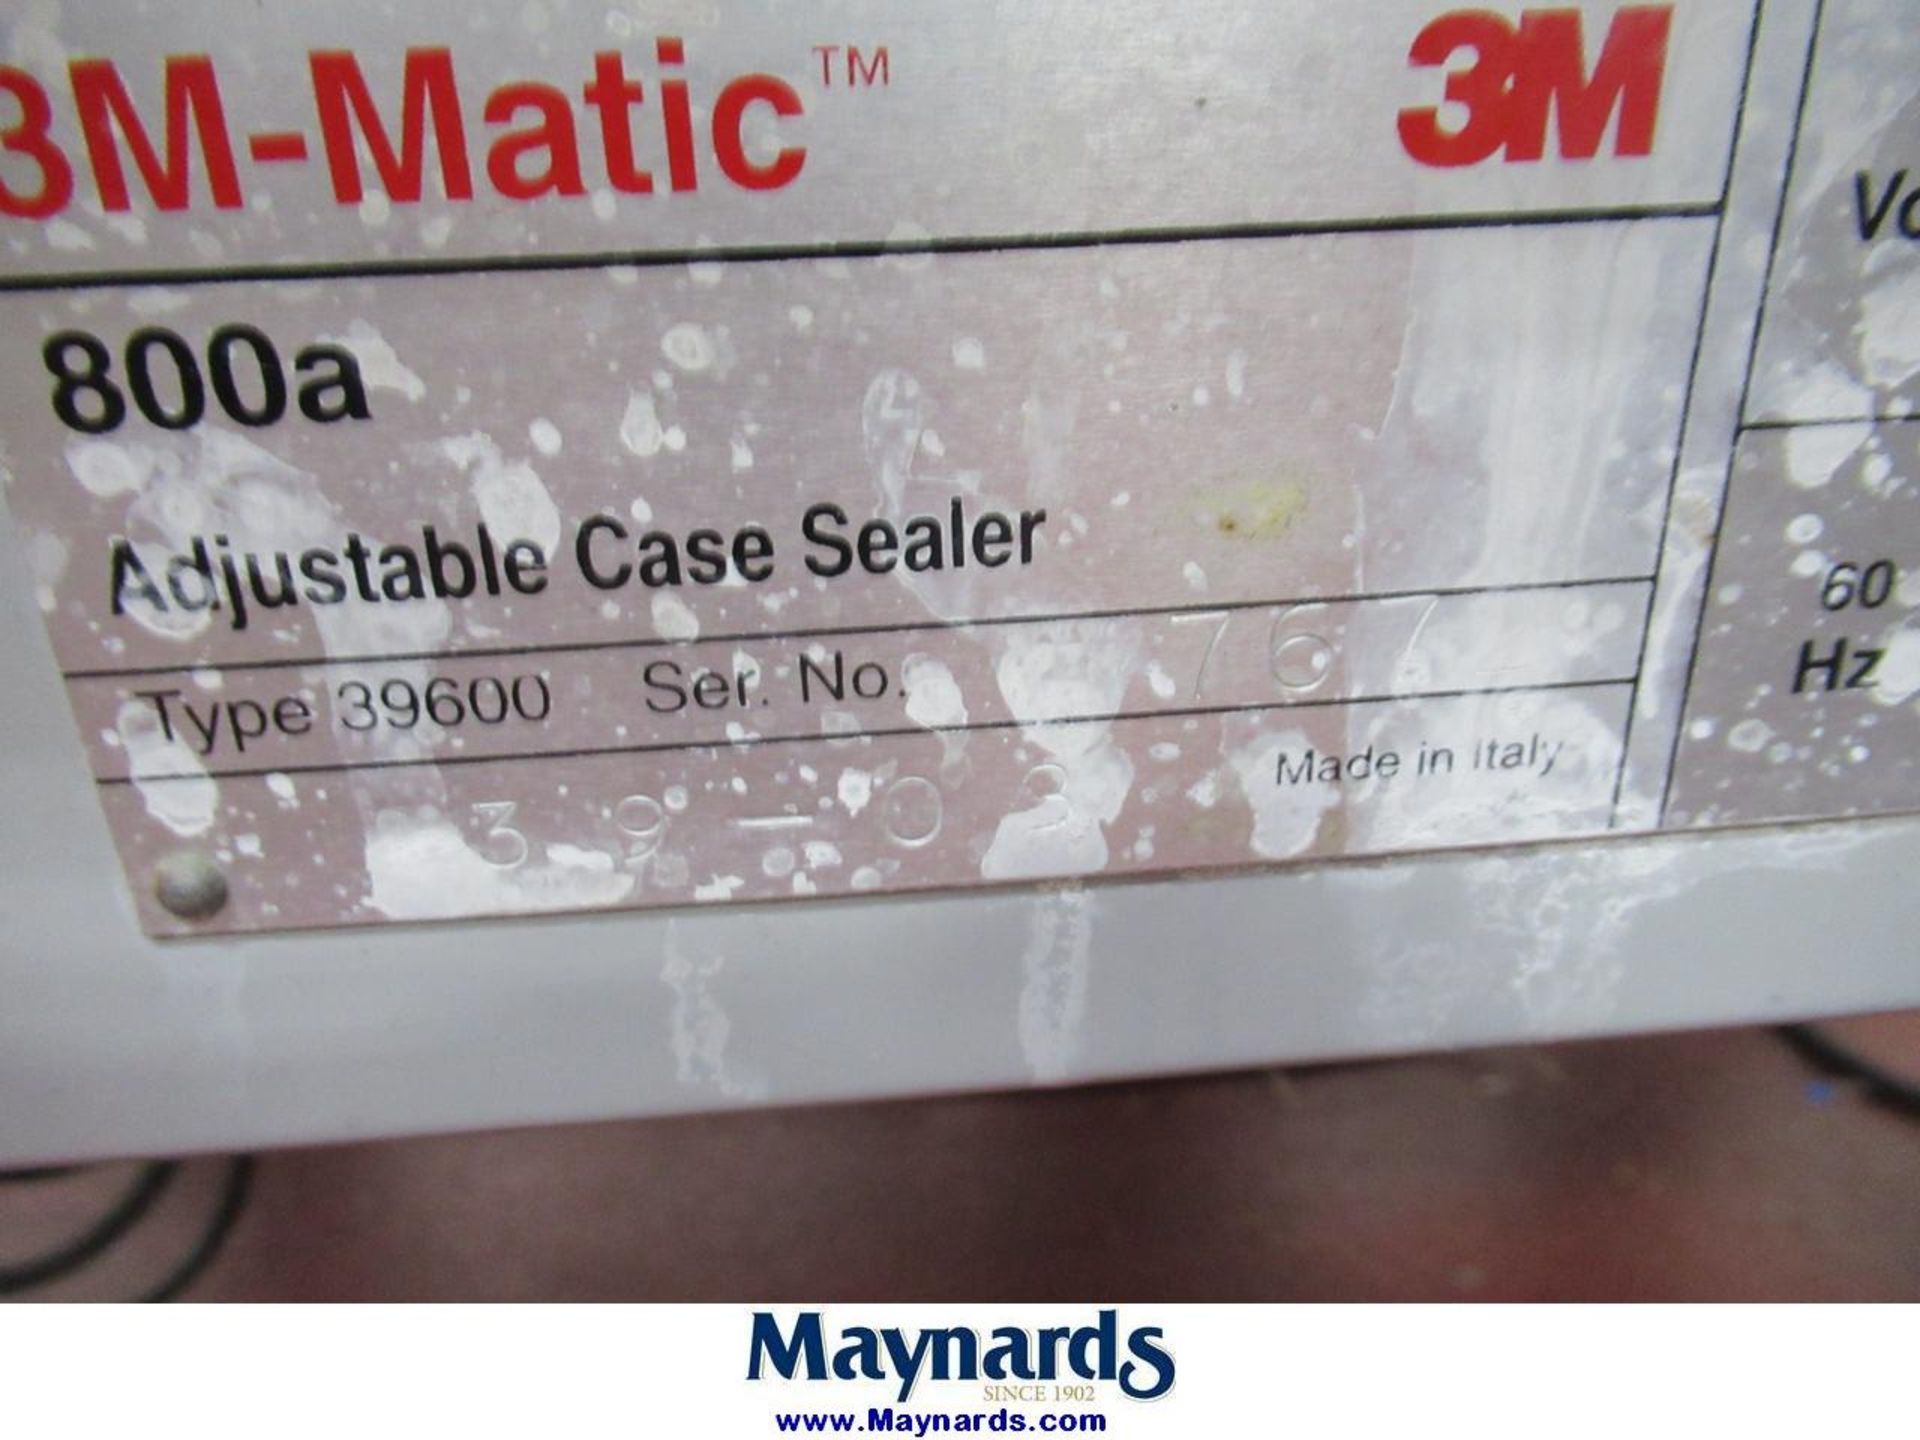 3M-Matic 800A Case Sealer - Image 4 of 4